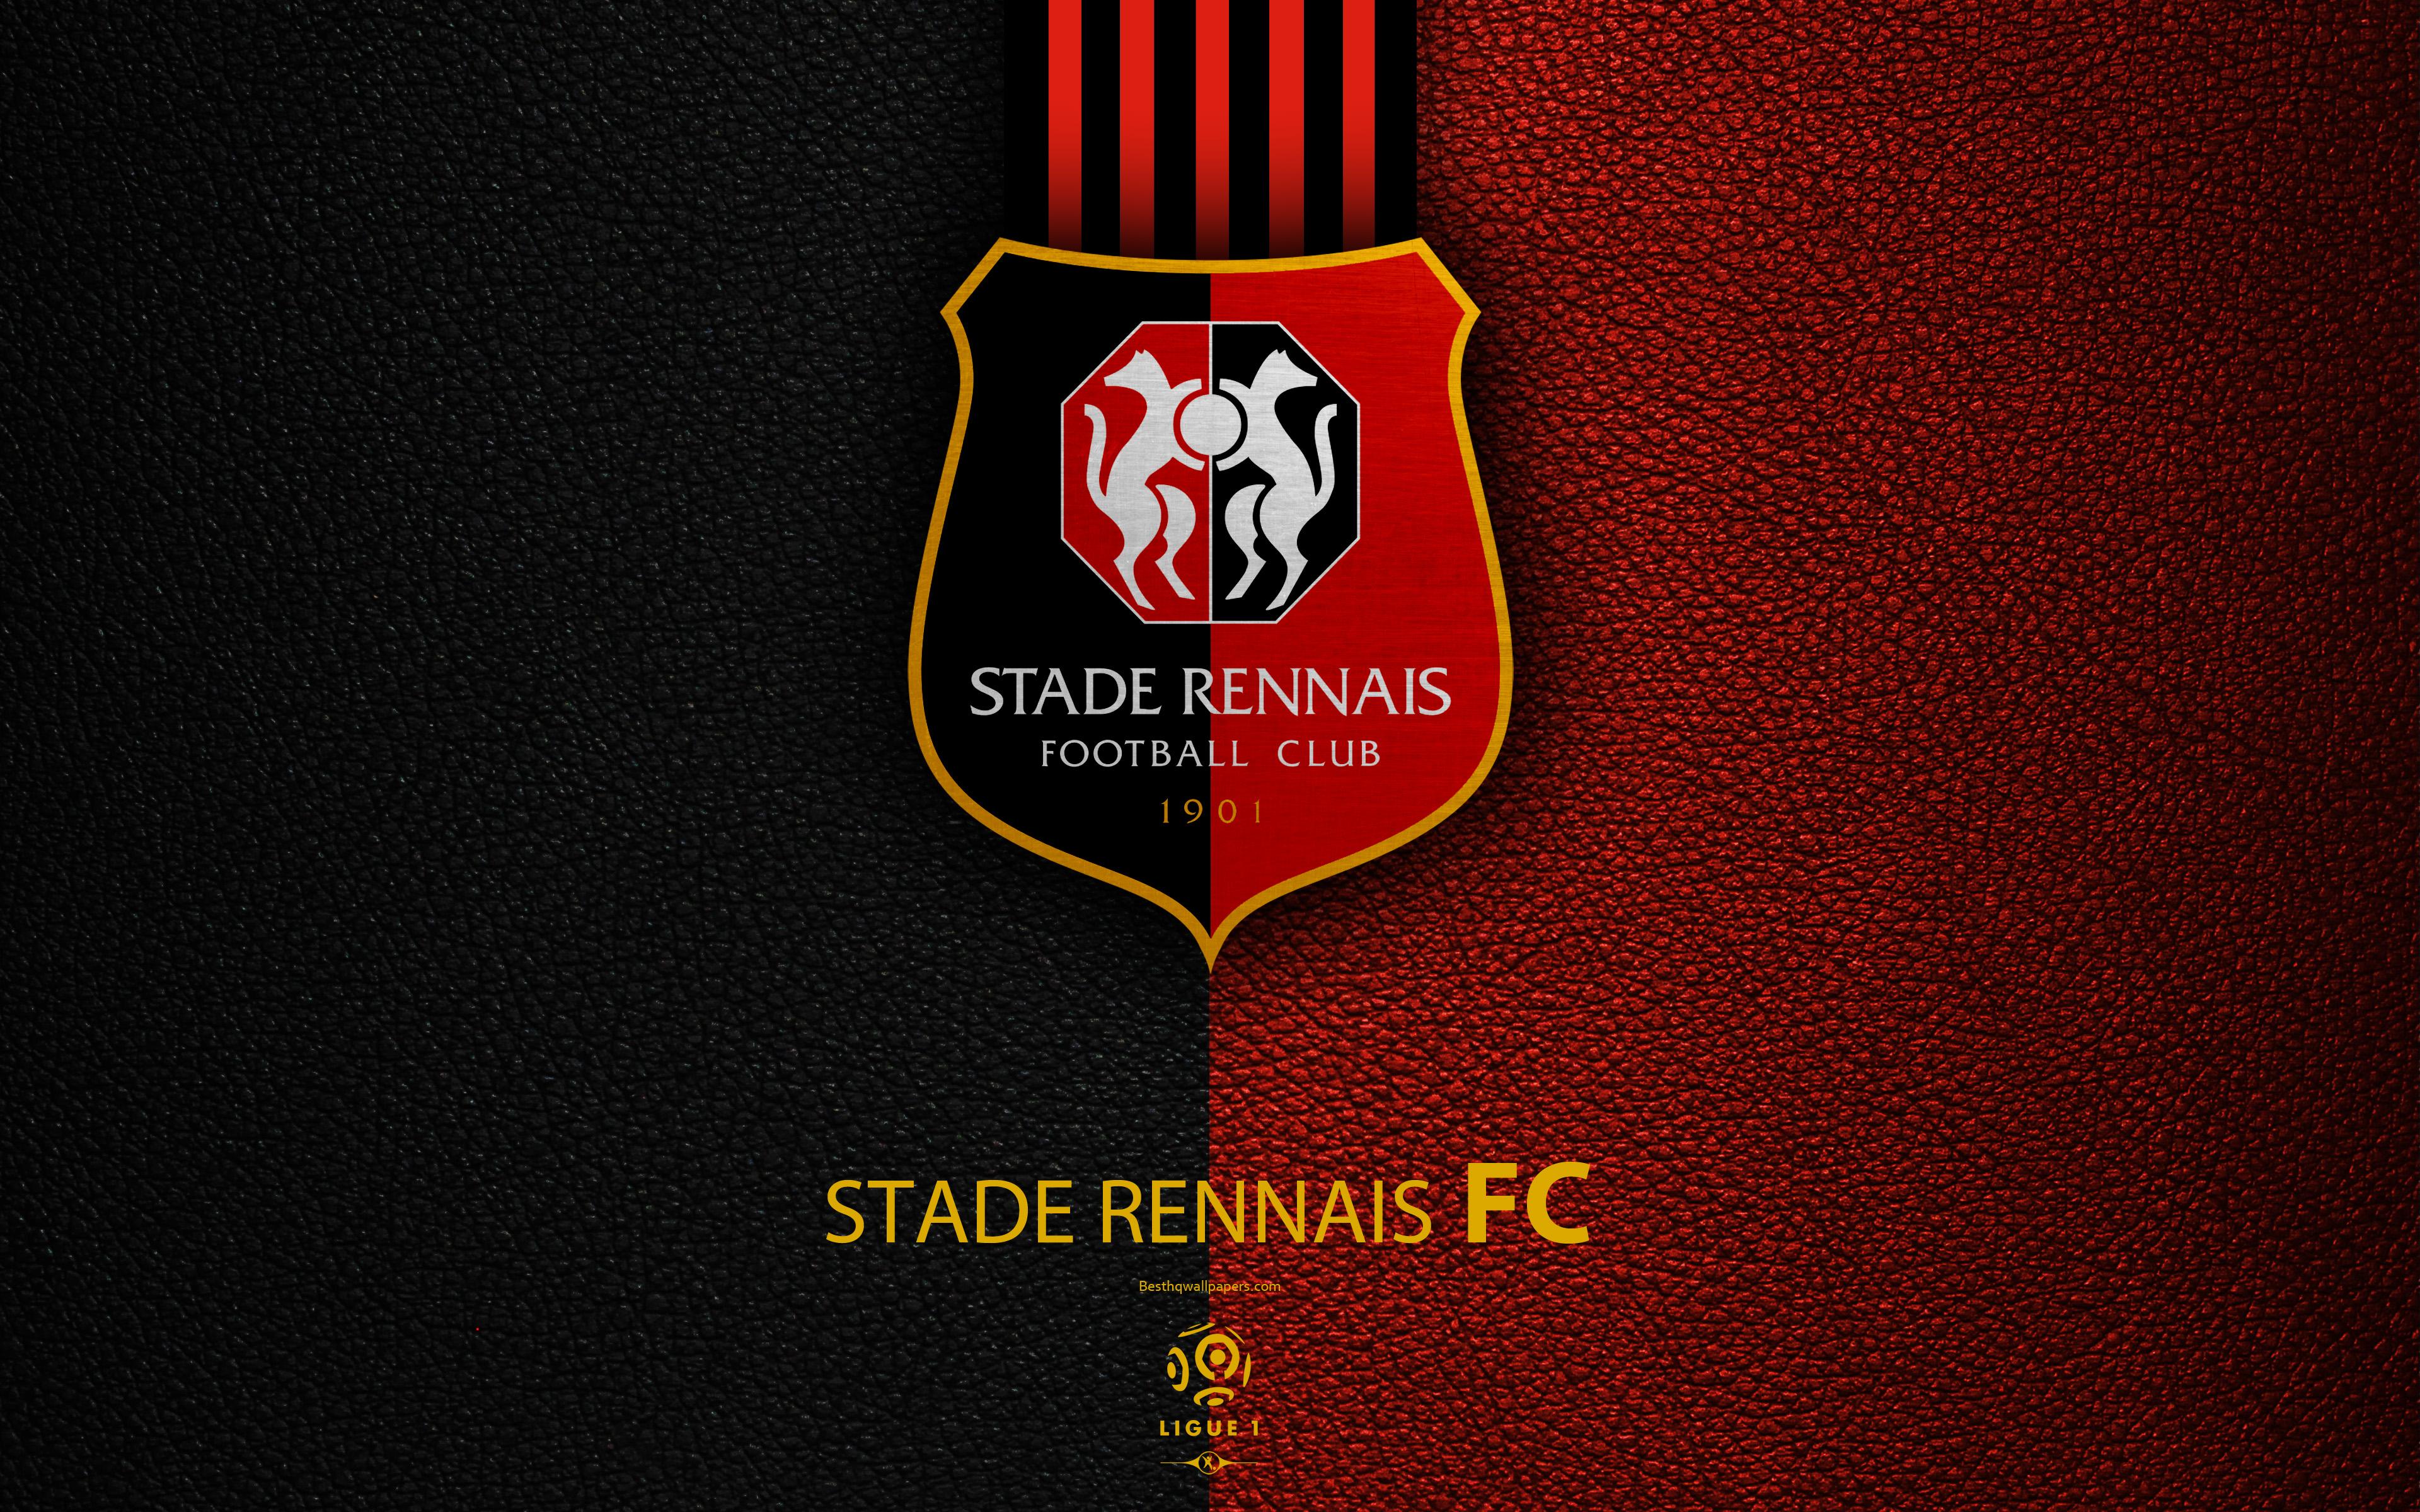 Download wallpaper Stade Rennais FC, 4K, French football club